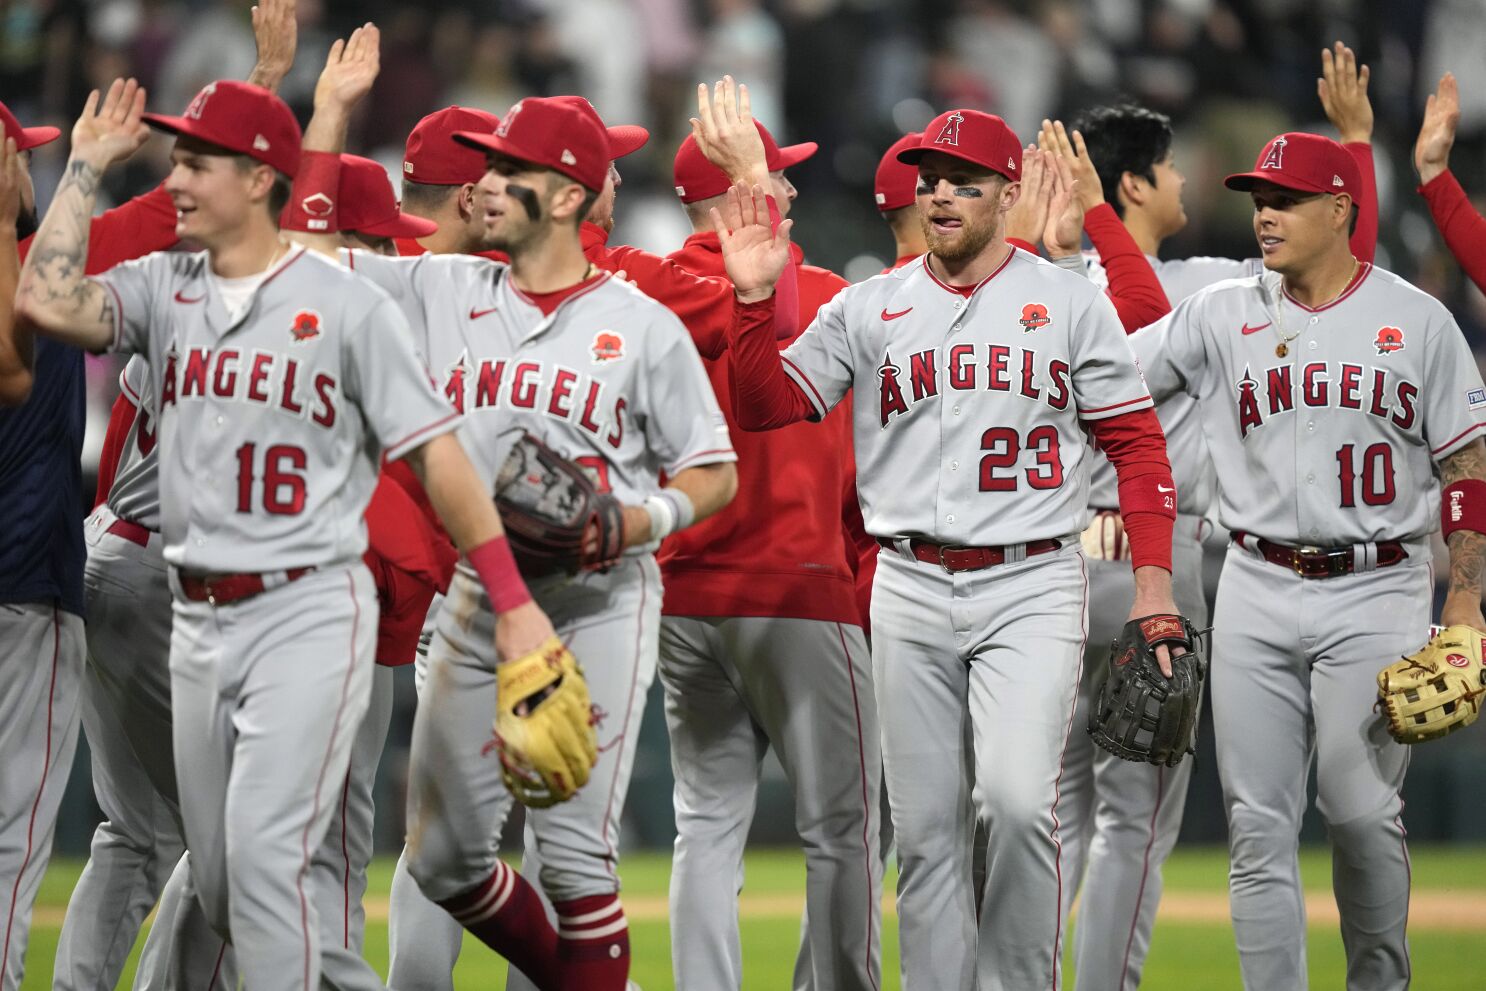 Los Angeles Angels Uniform and Team History